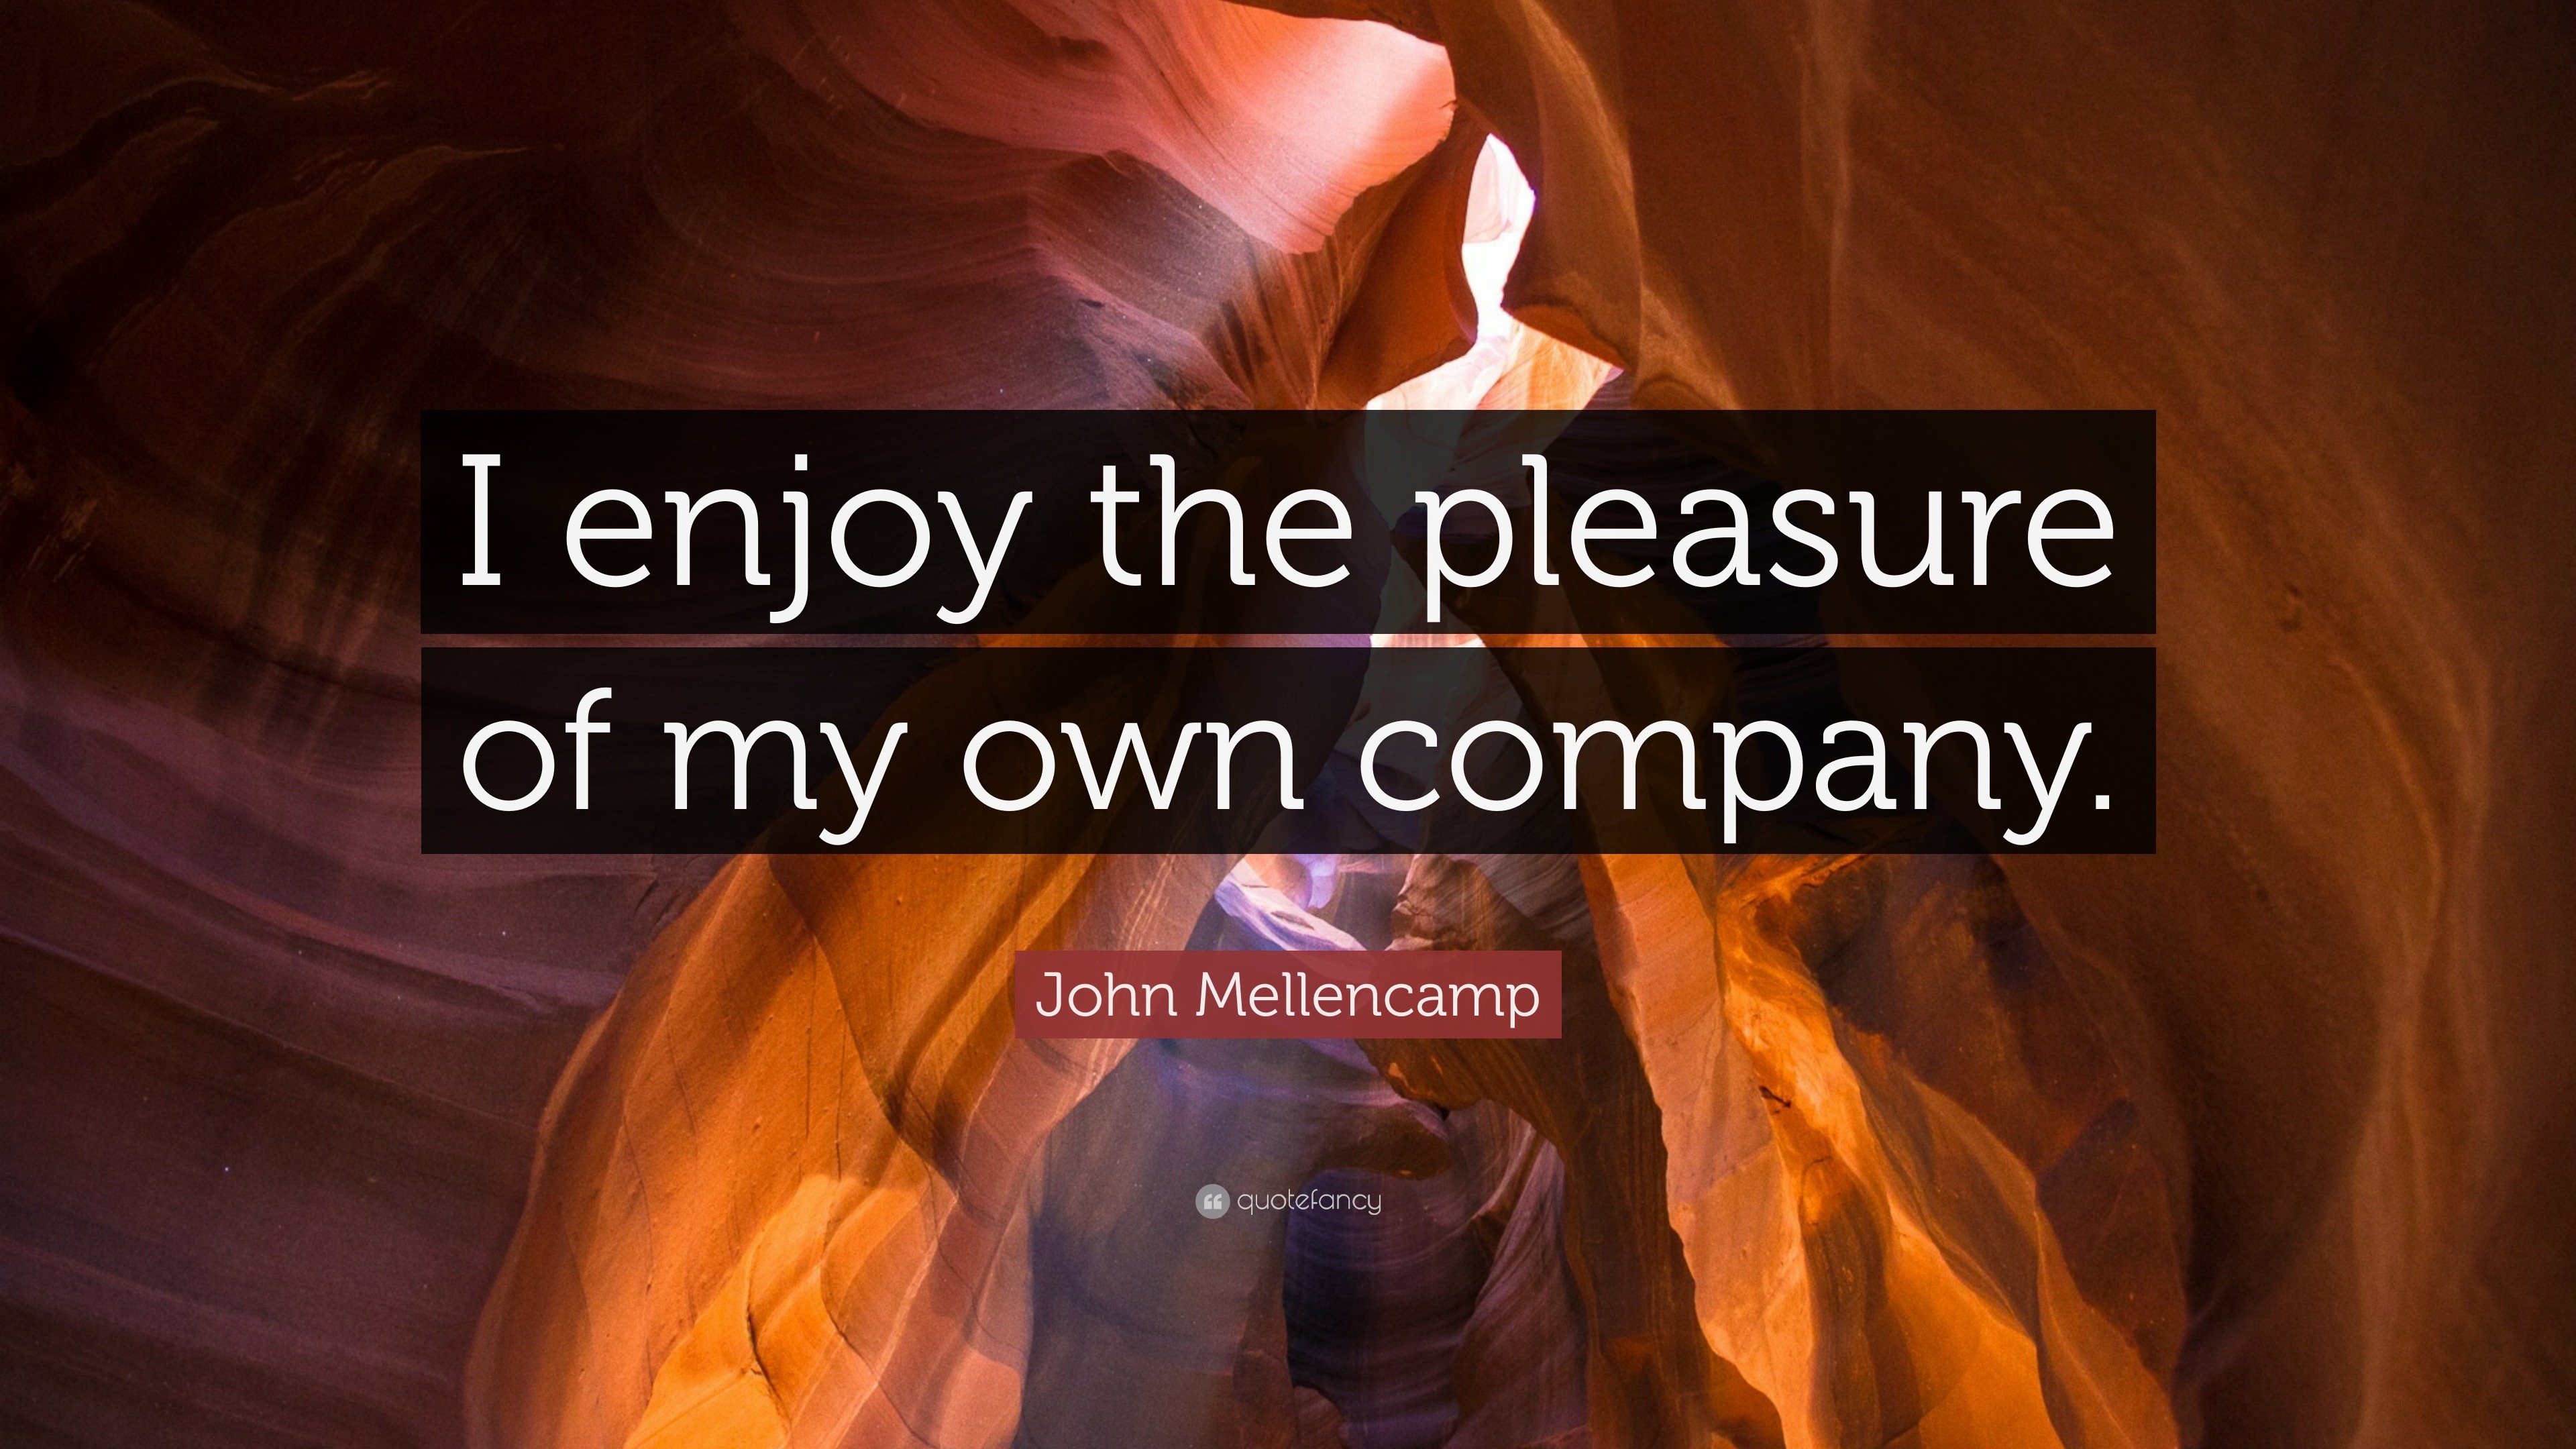 The Pleasure of My Company by Steve Martin